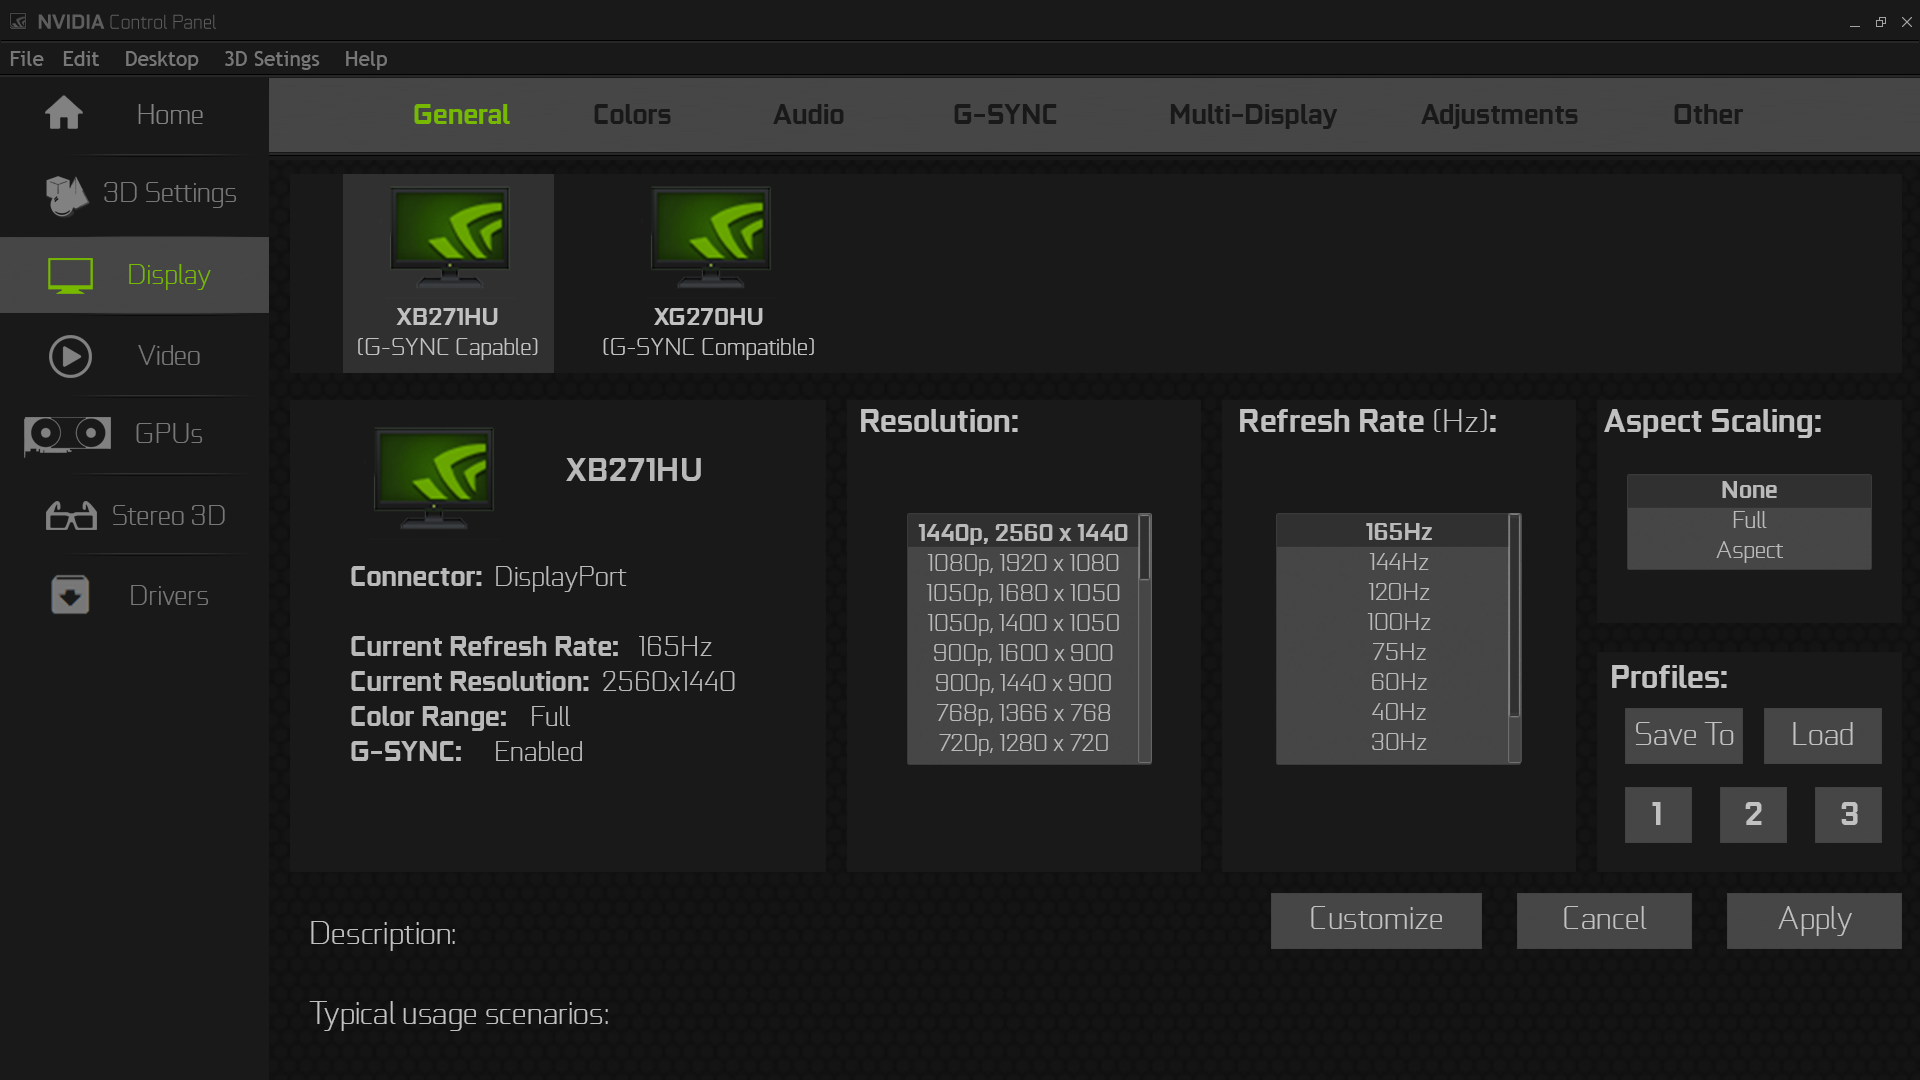 nvidia control panel best settings 3080